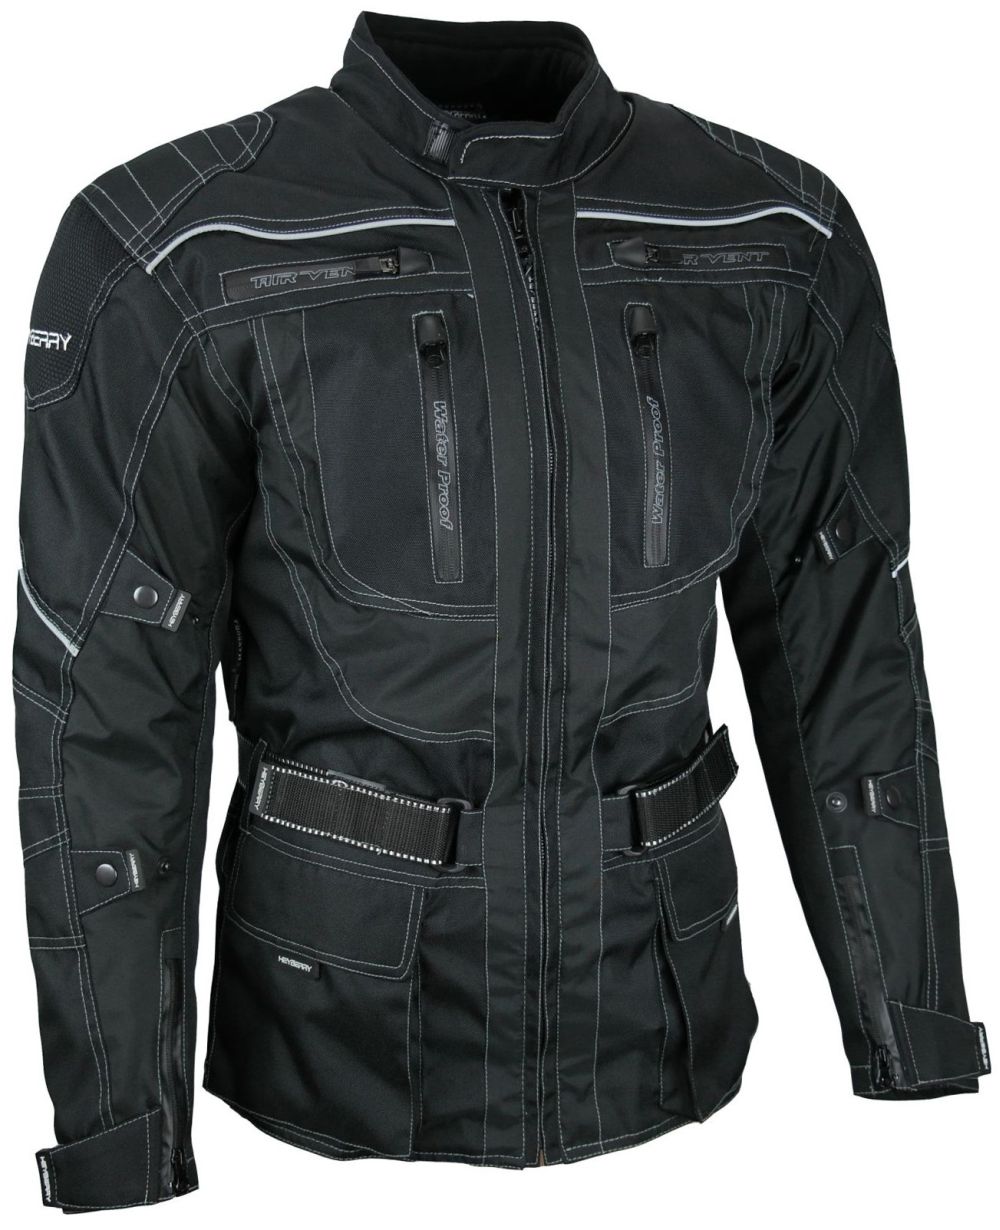 Heyberry Touren Motorrad Jacke Motorradjacke Textil schwarz Gr. M - 3XL